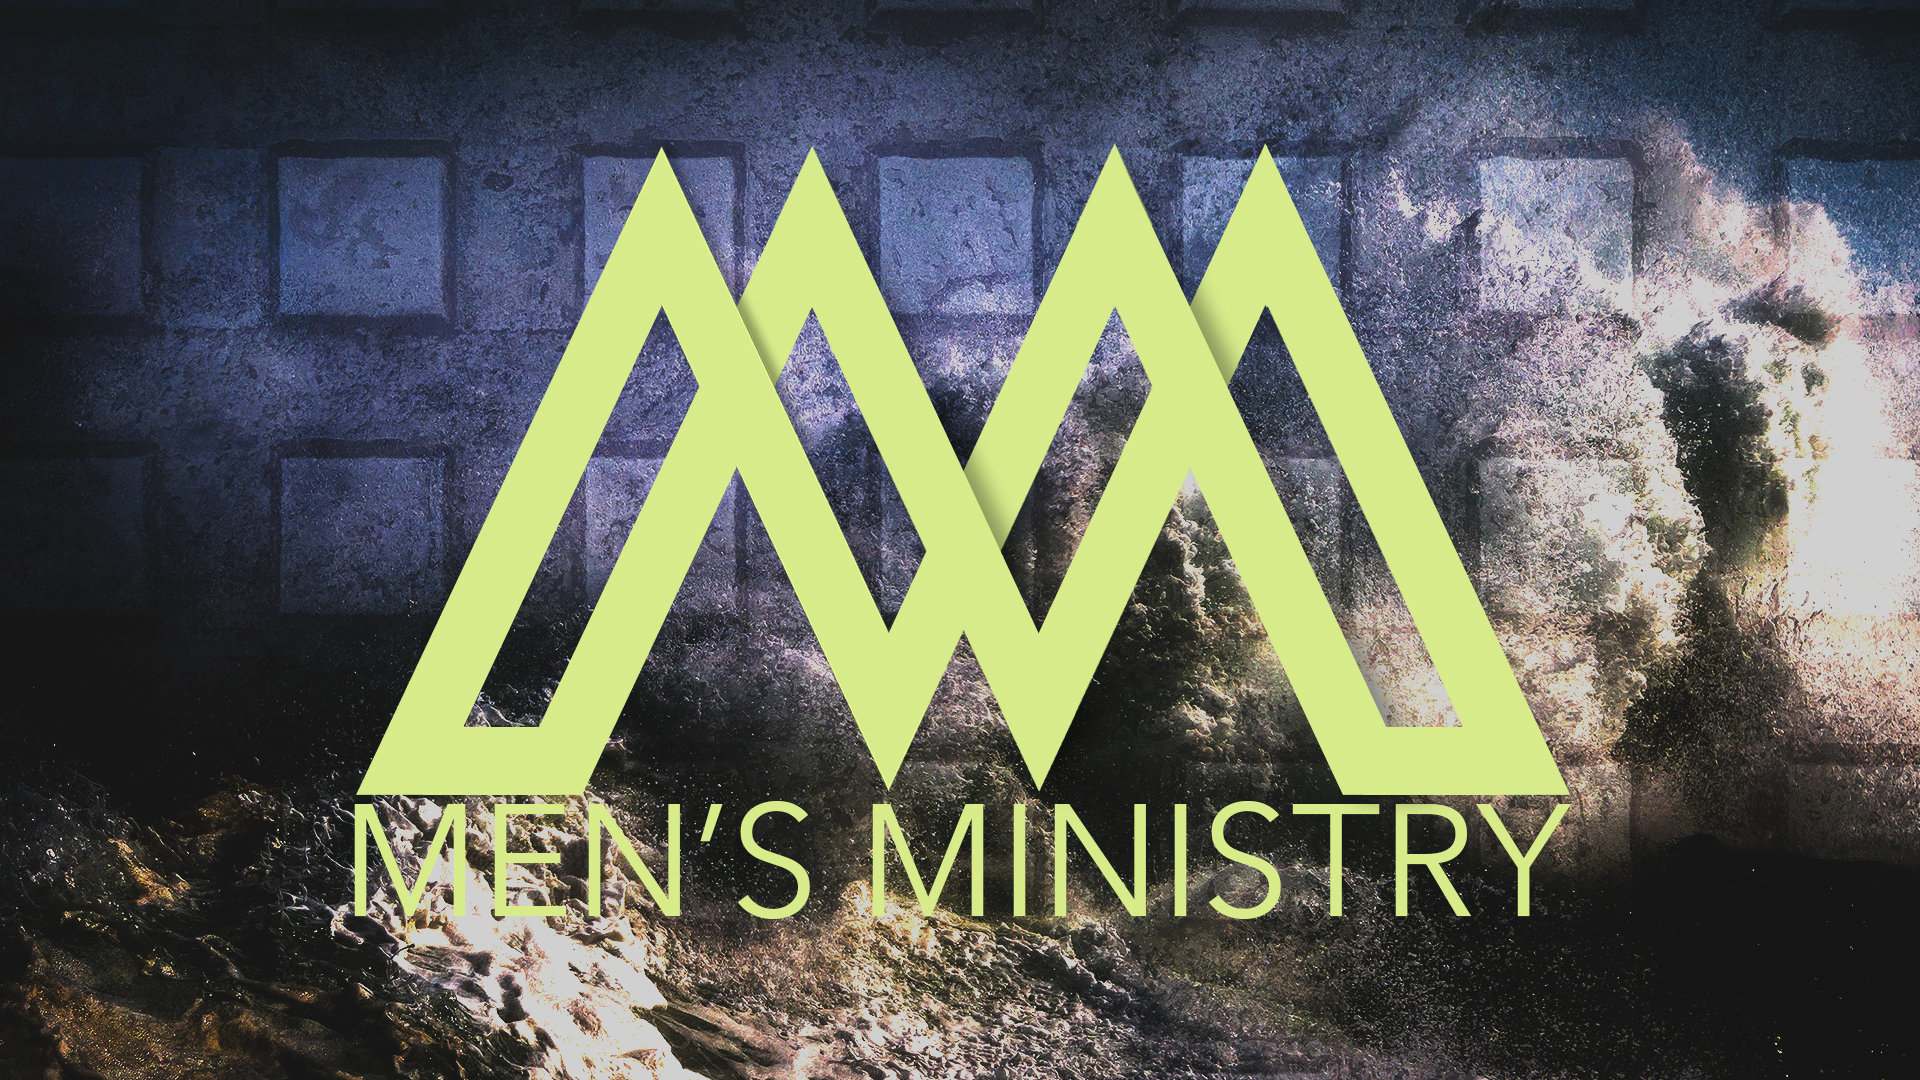 Men's Ministry for retreat